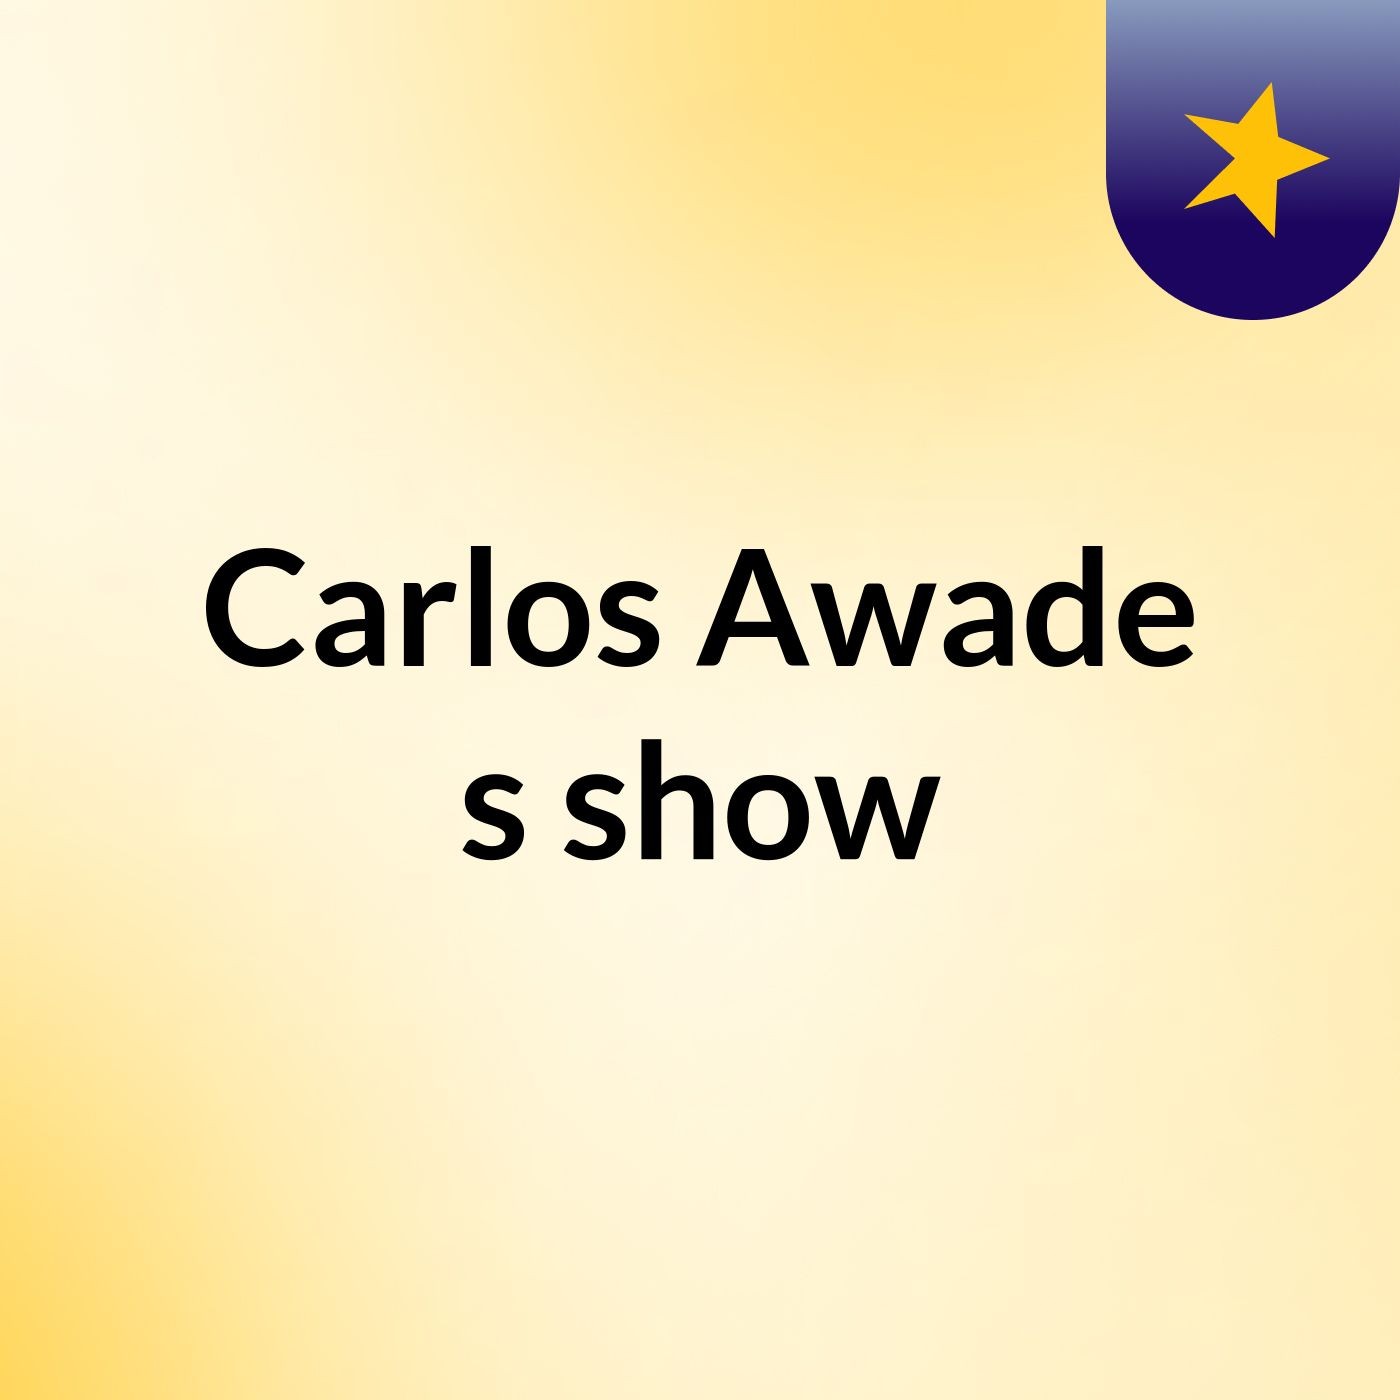 Carlos Awade's show